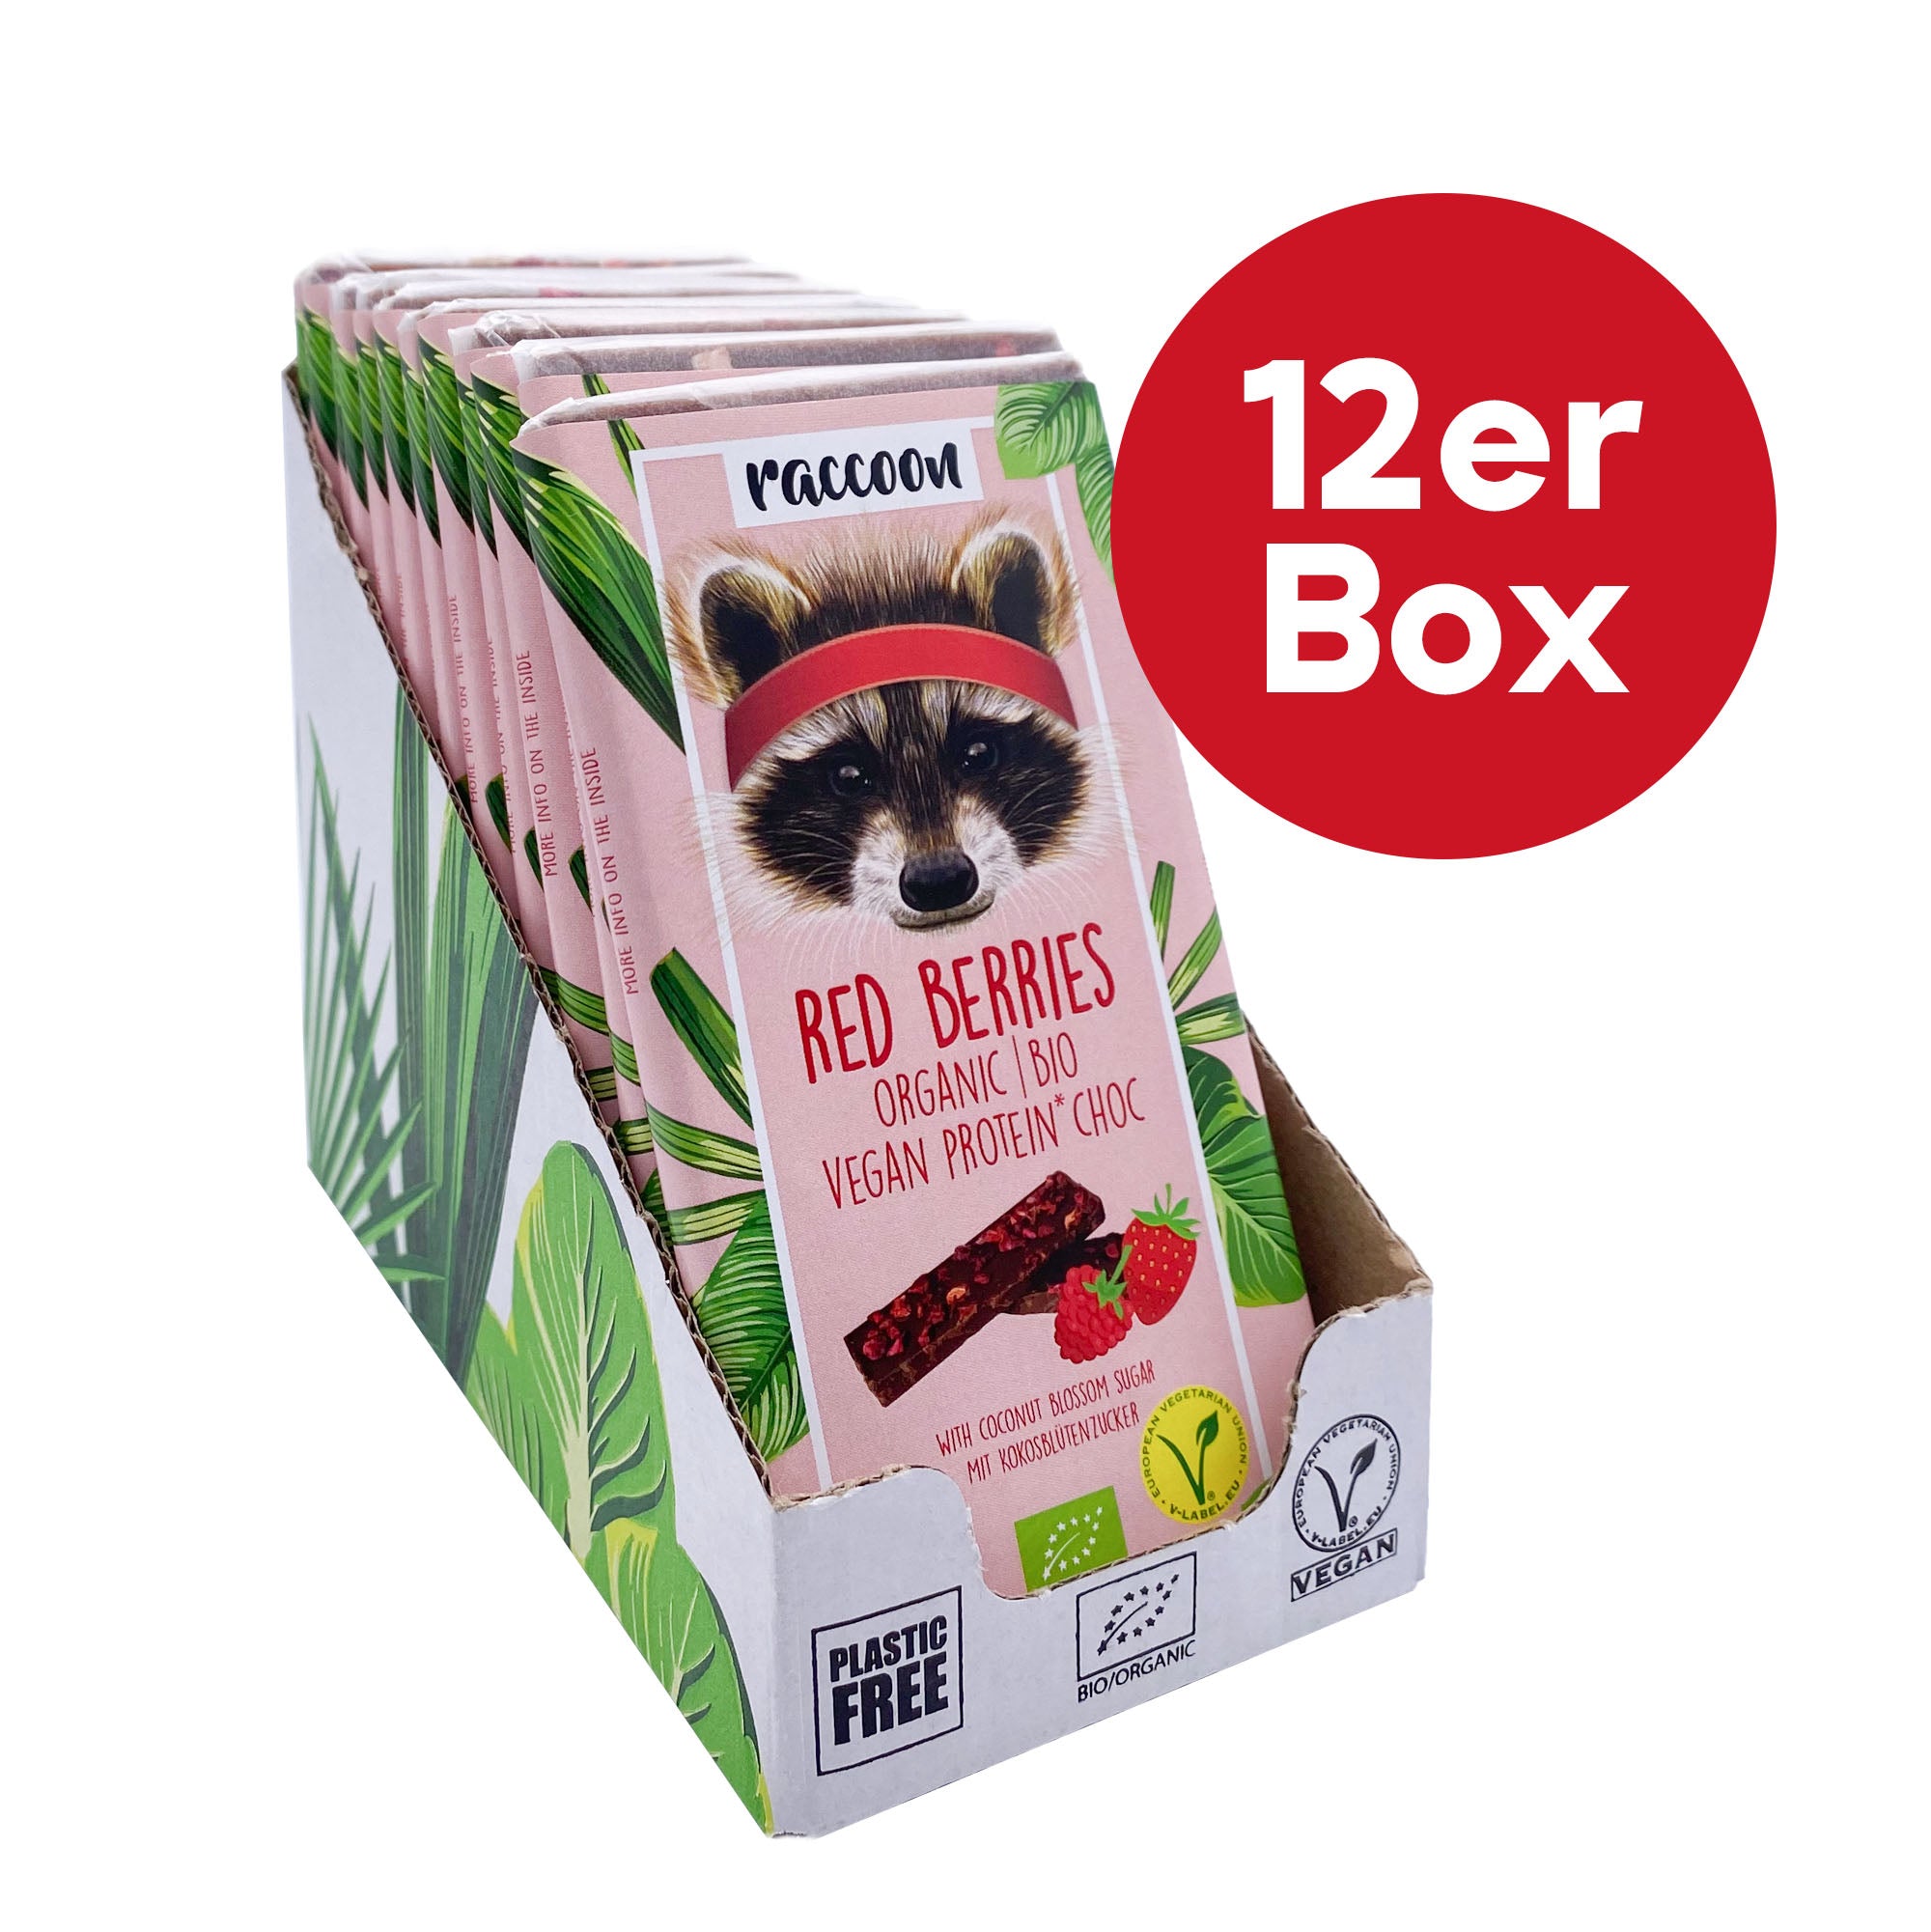 Red Berries - Box of 12